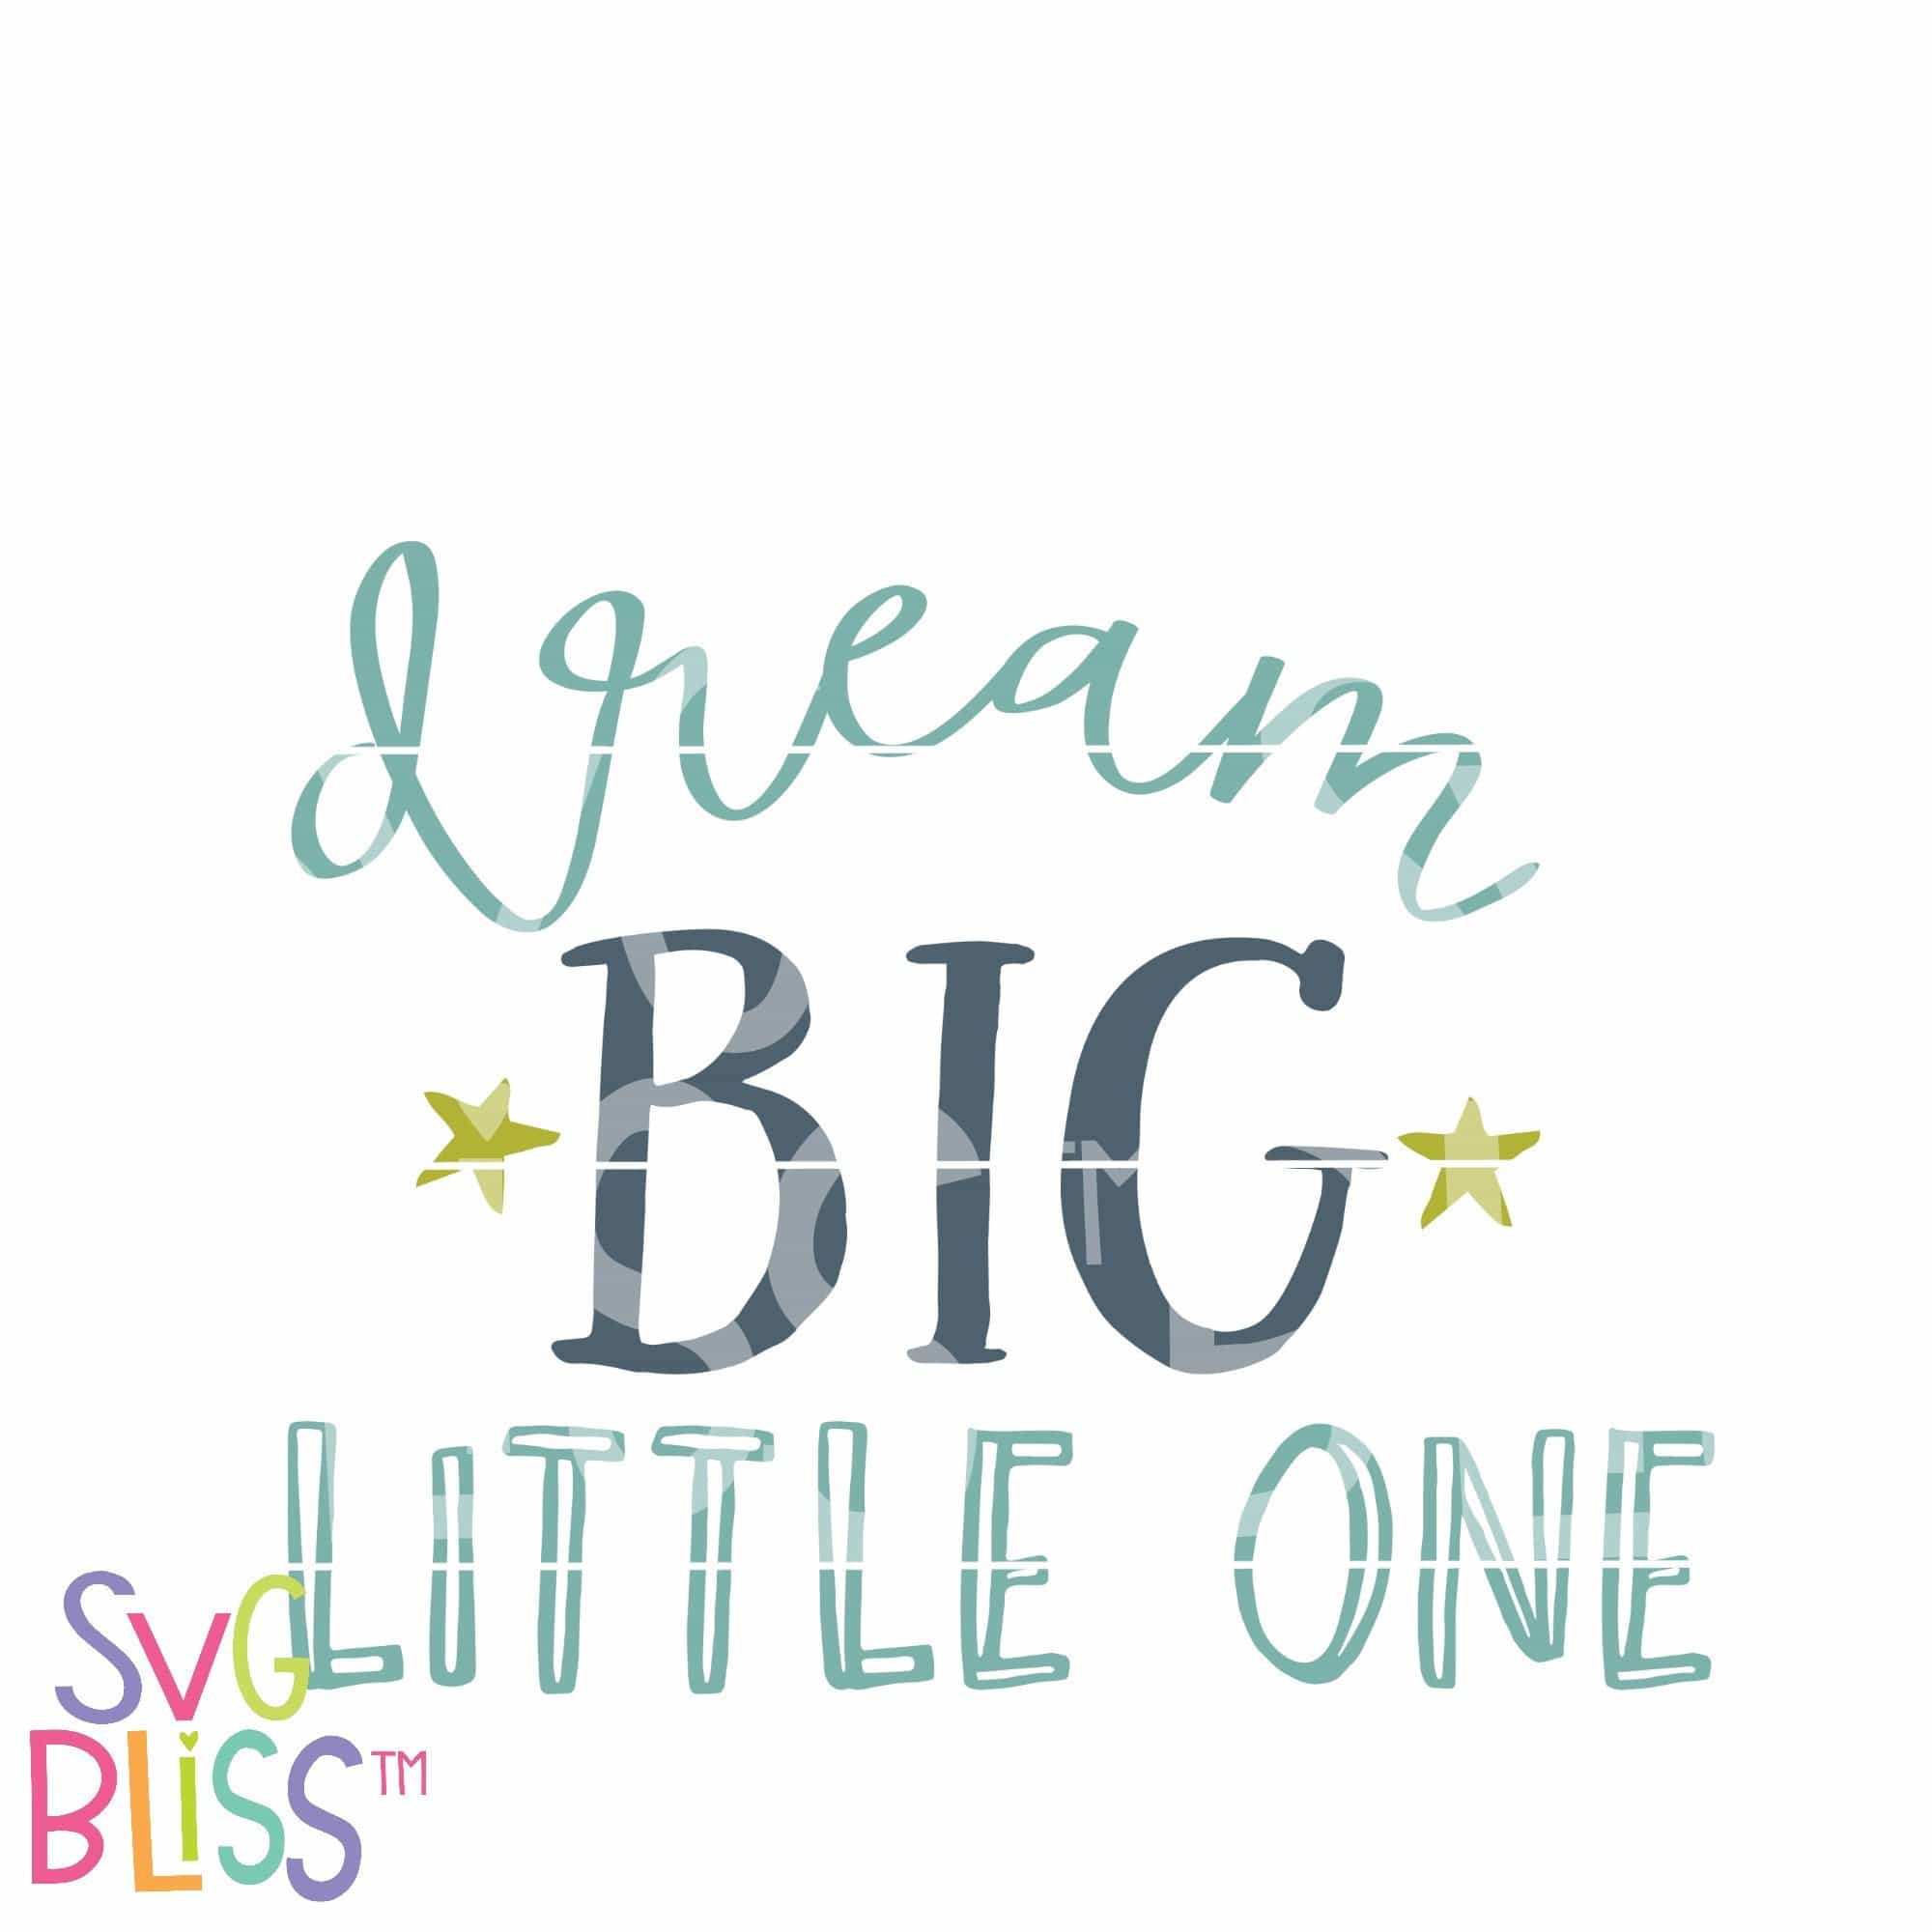 SVG Bliss™| Dream Big Little One